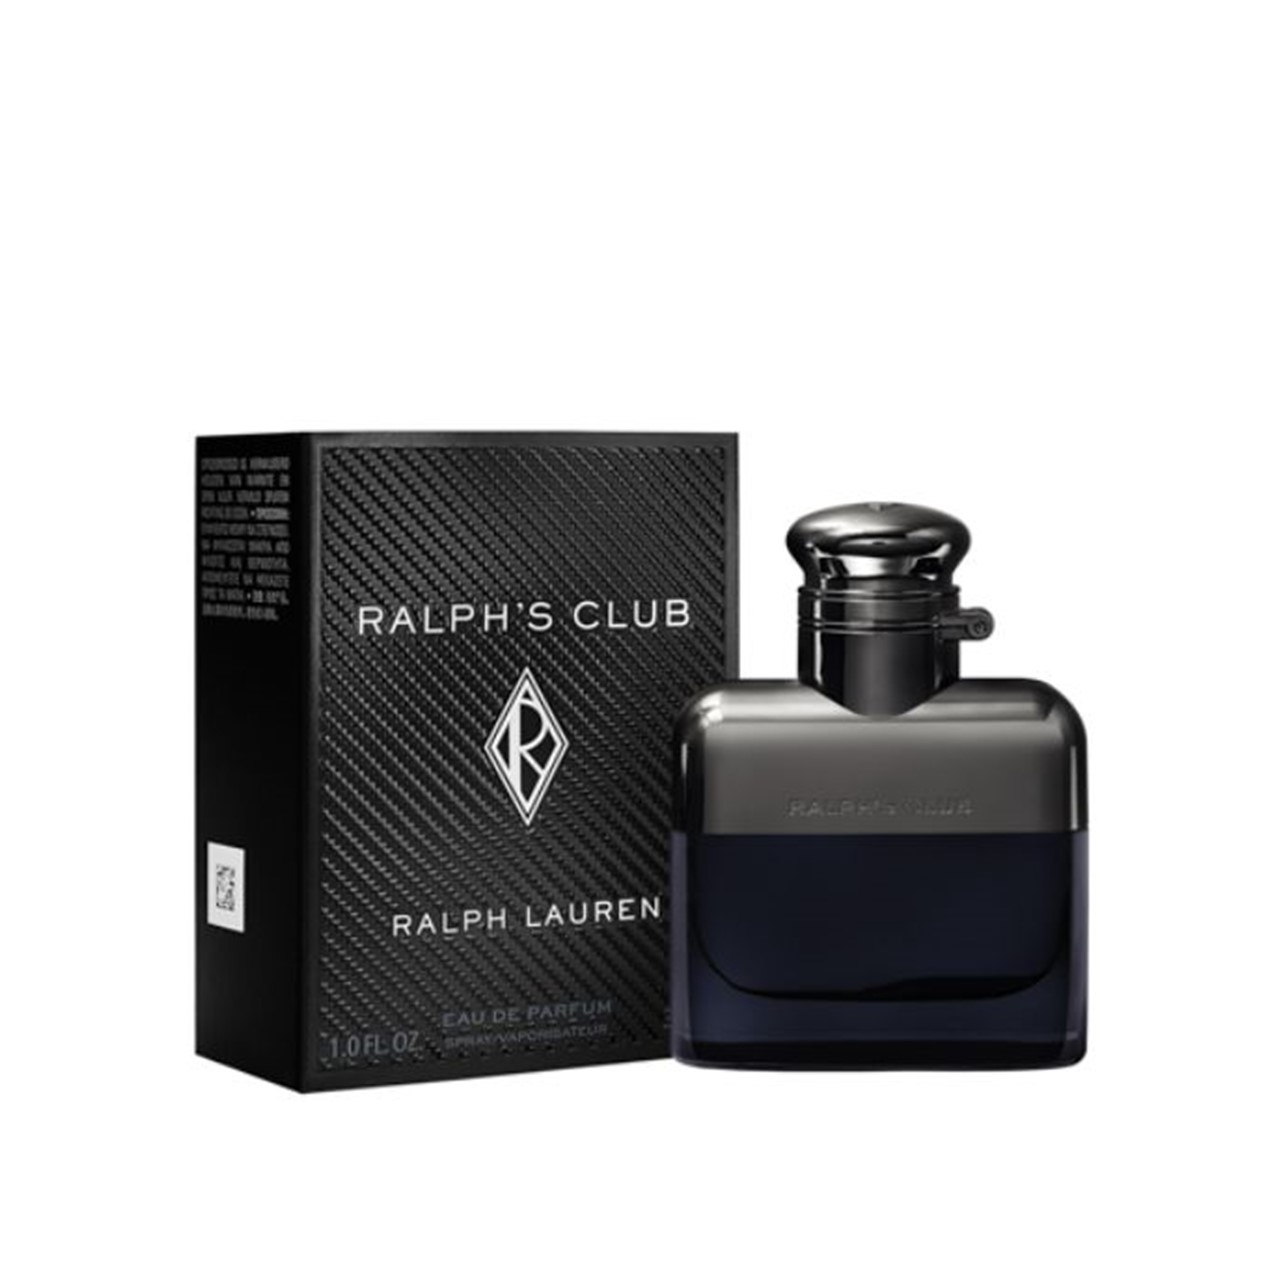 Ralph Lauren Ralph's Club Eau de Parfum For Men 30ml (1.0fl oz)